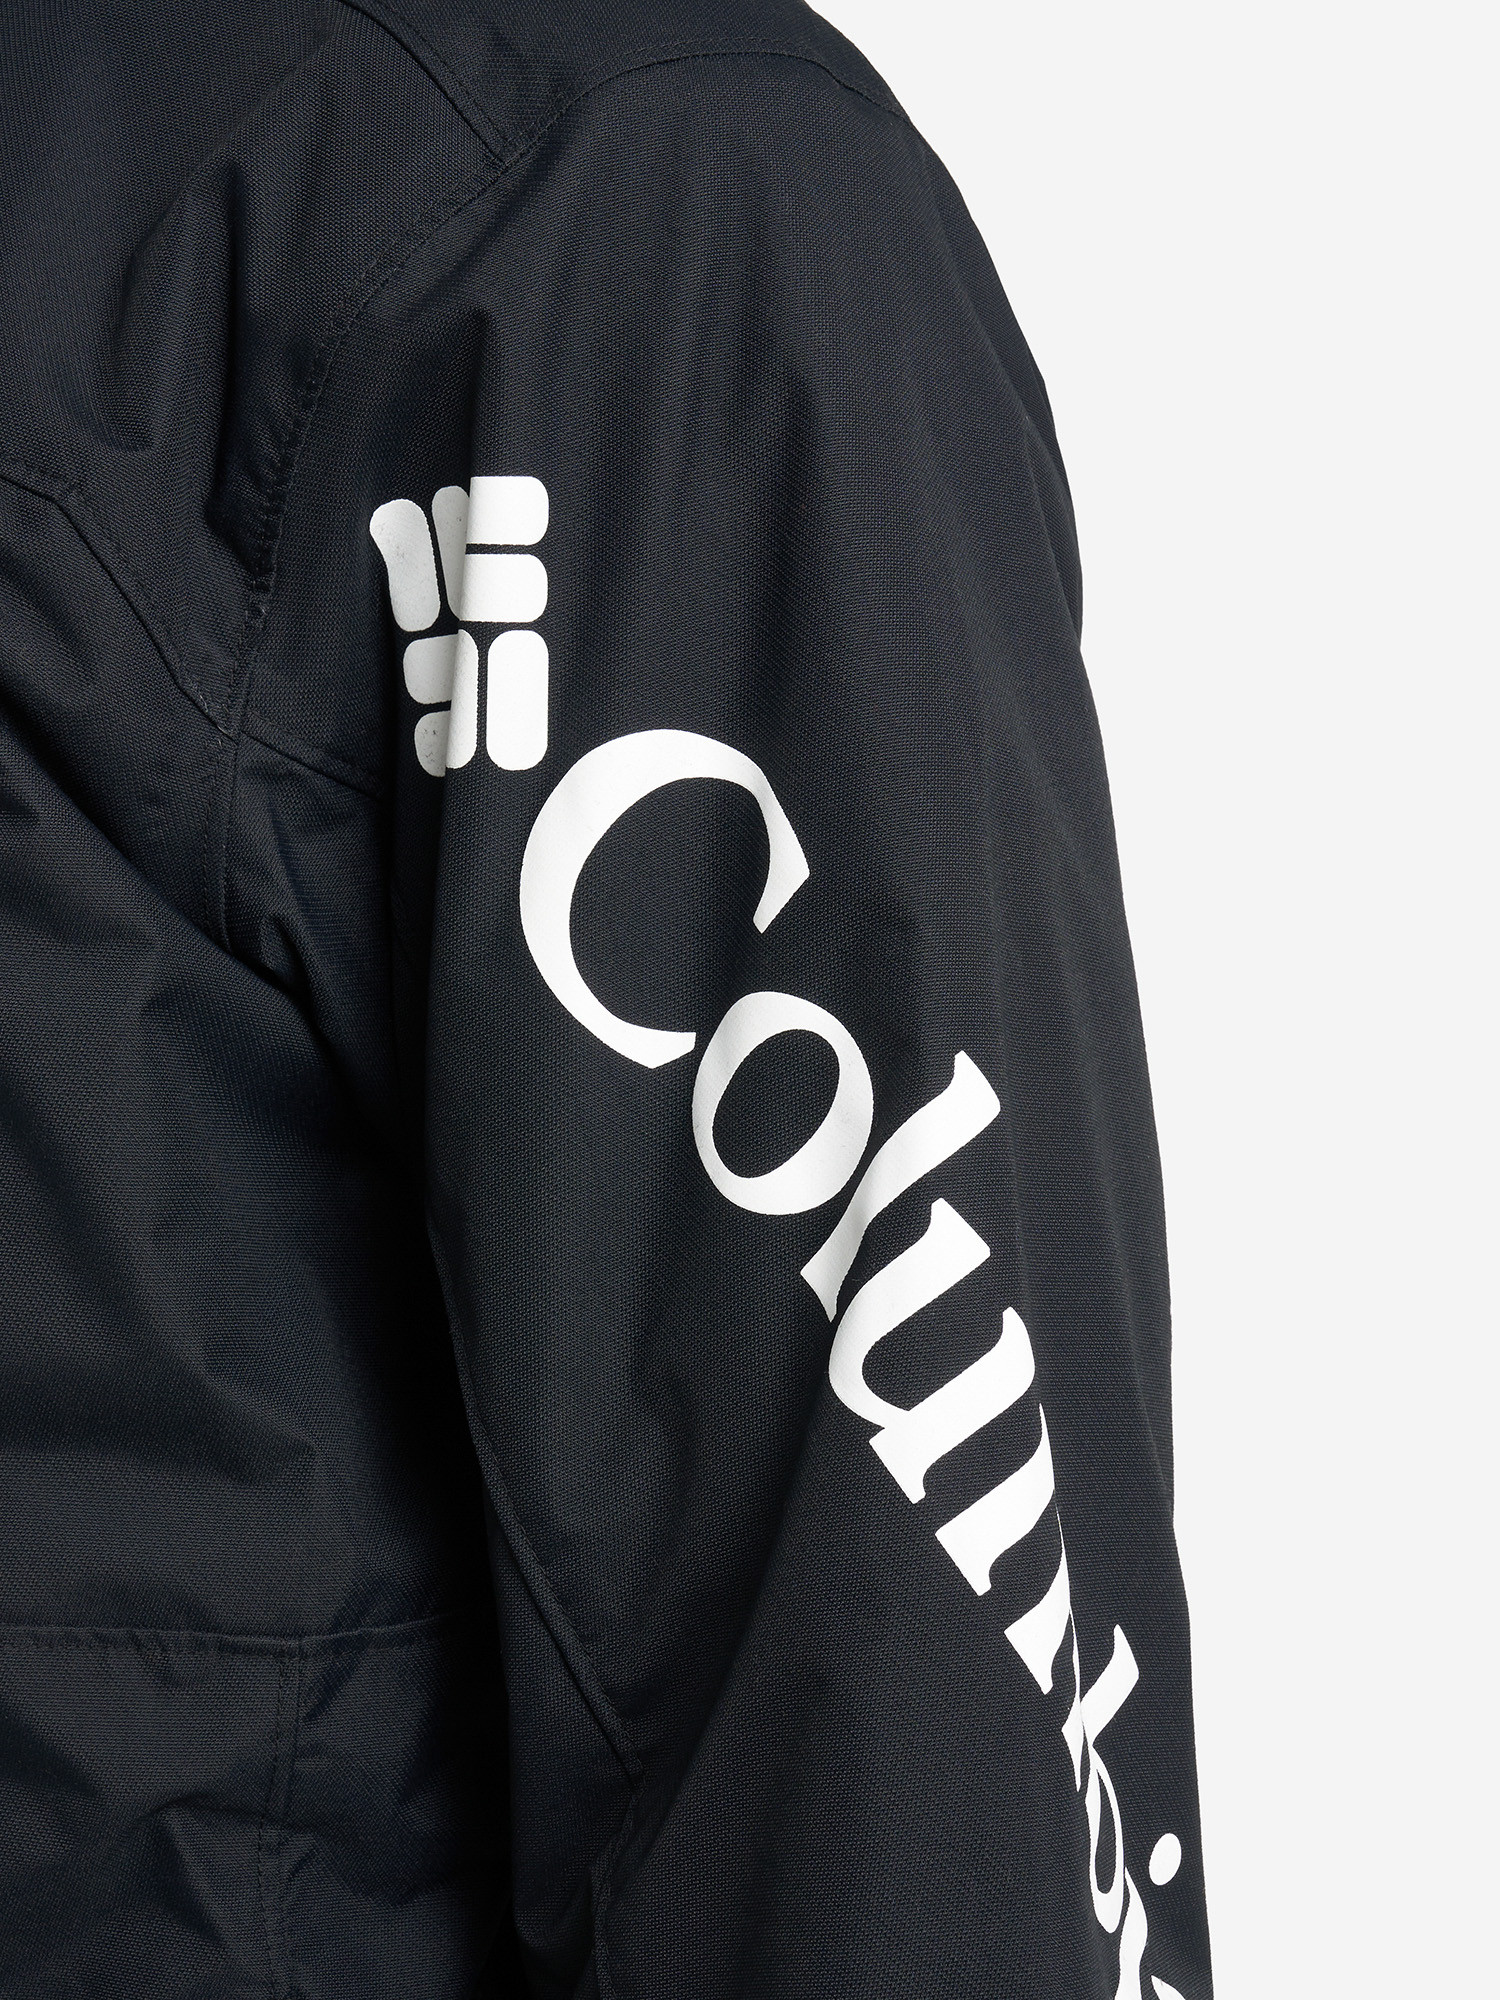 Куртка утепленная мужская Columbia Timberturner II Jacket